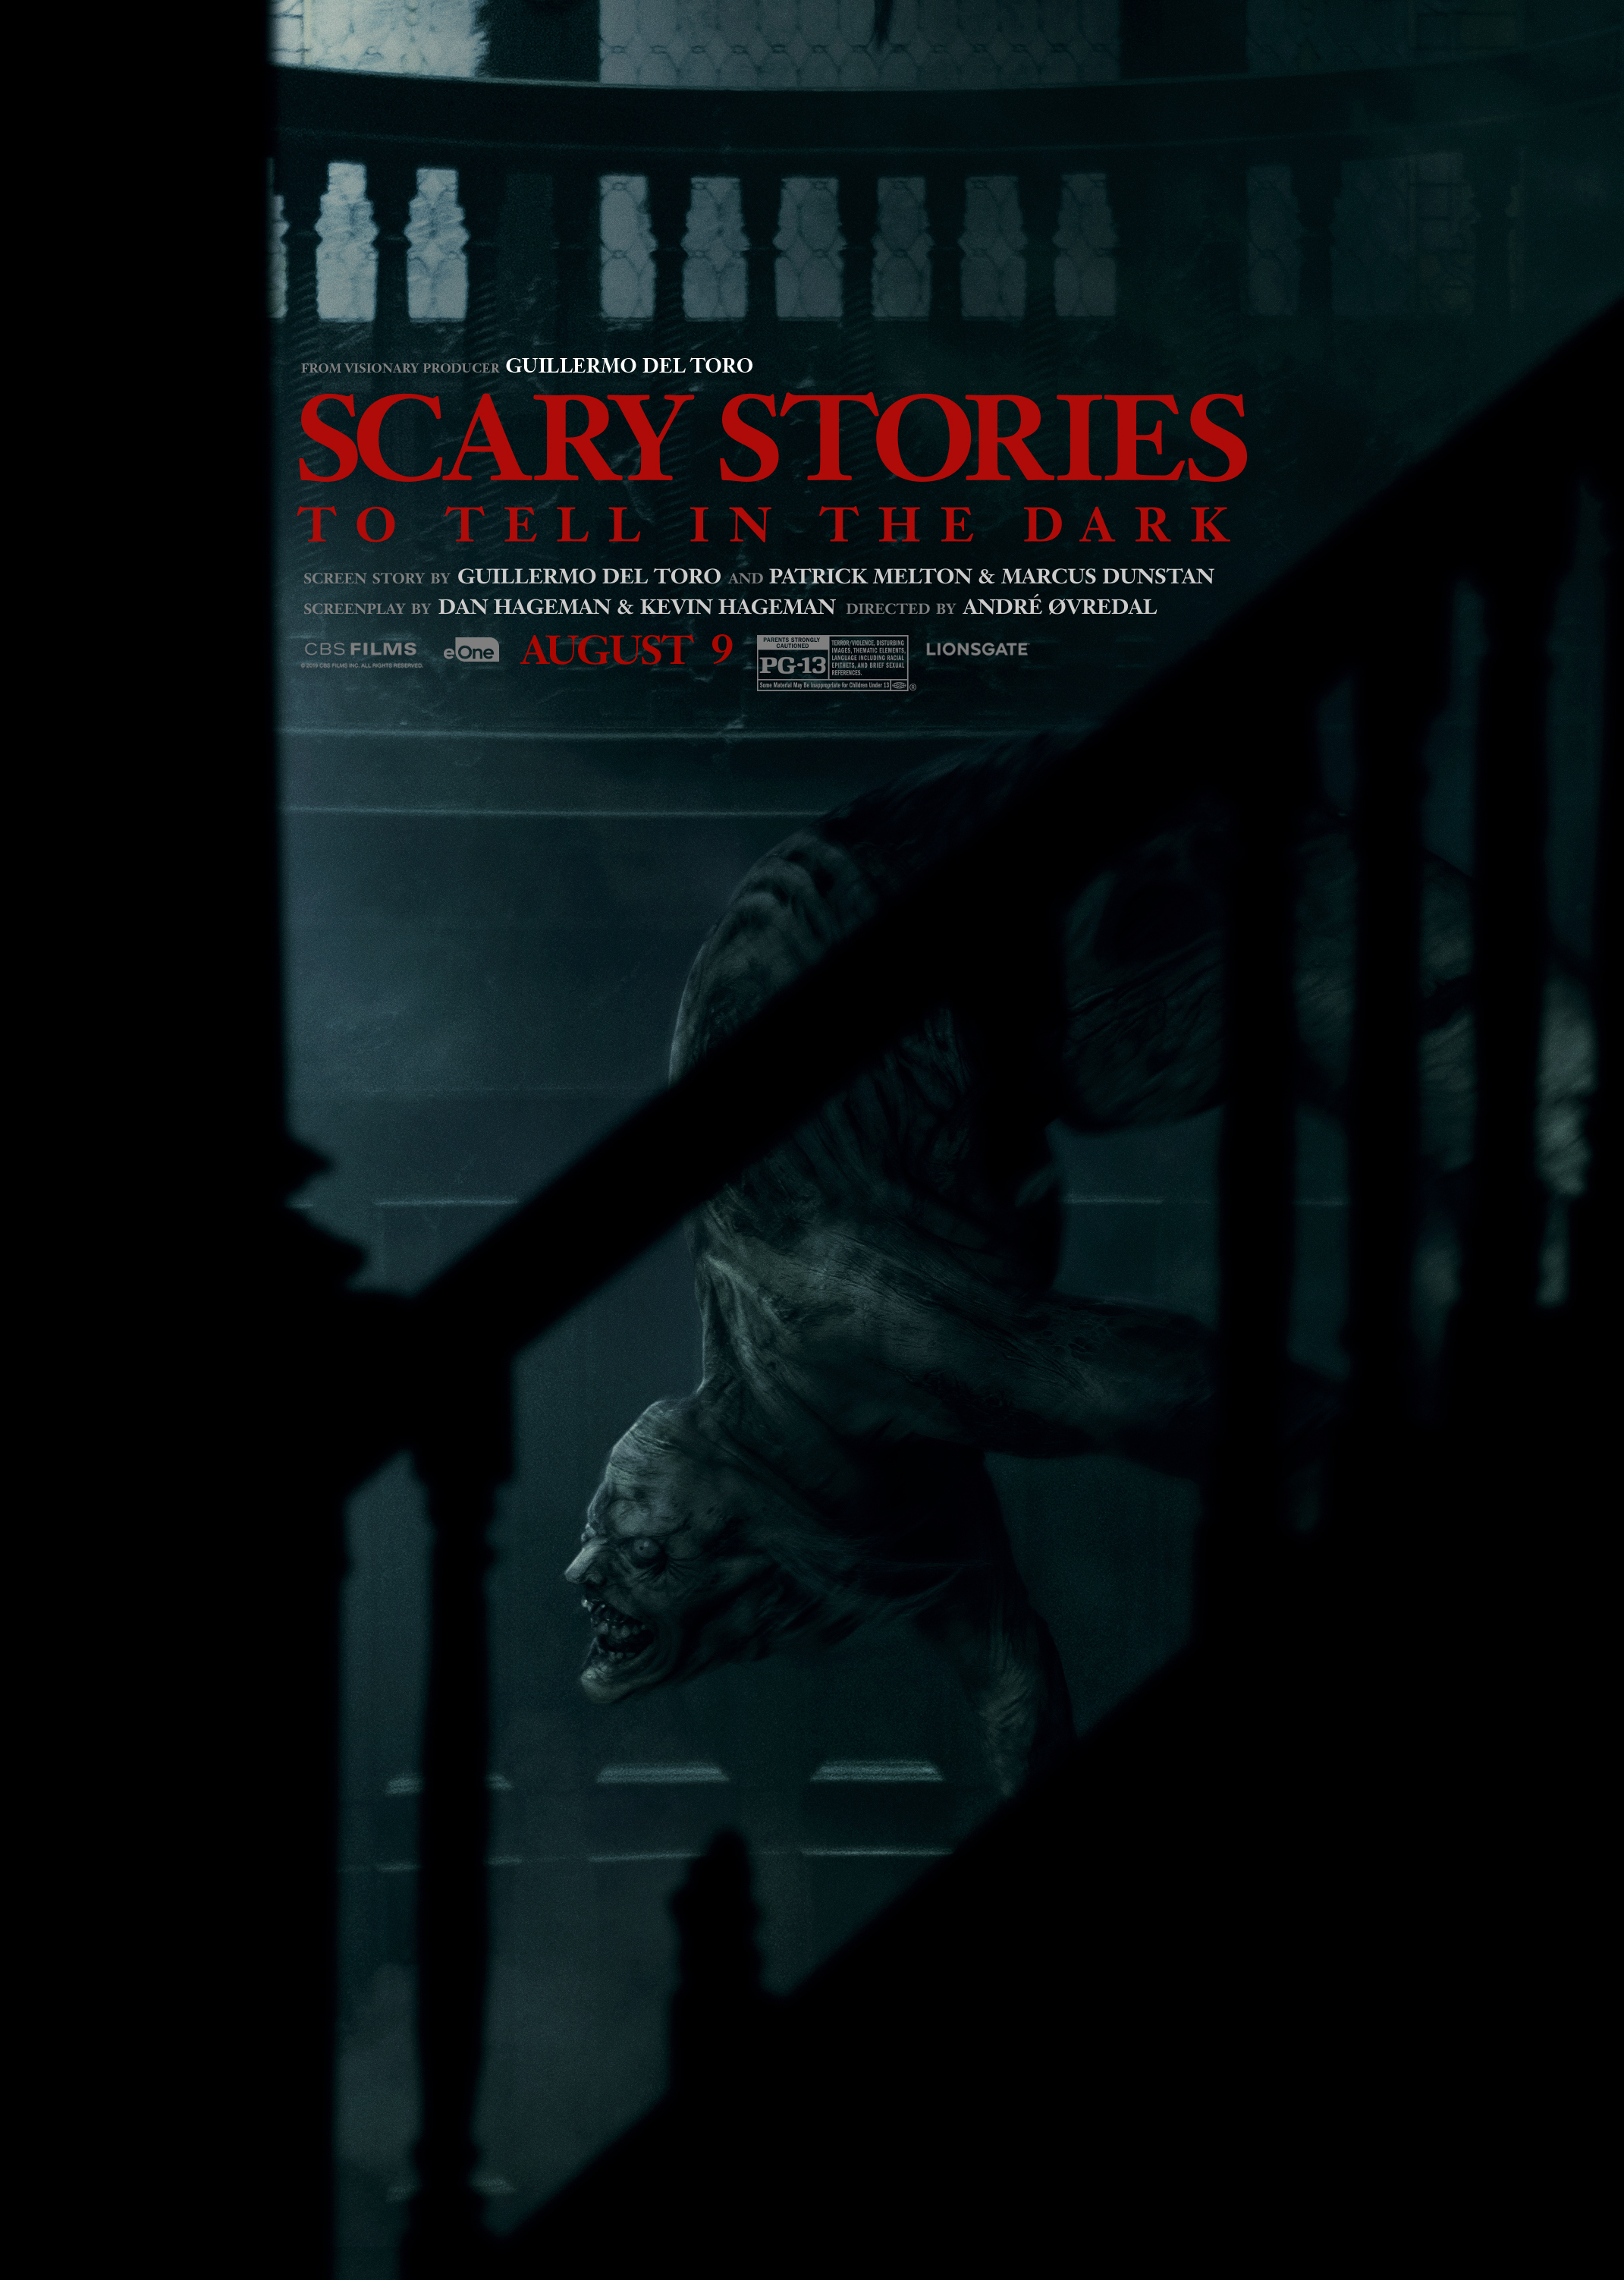 Nonton film Scary Stories to Tell in the Dark layarkaca21 indoxx1 ganool online streaming terbaru